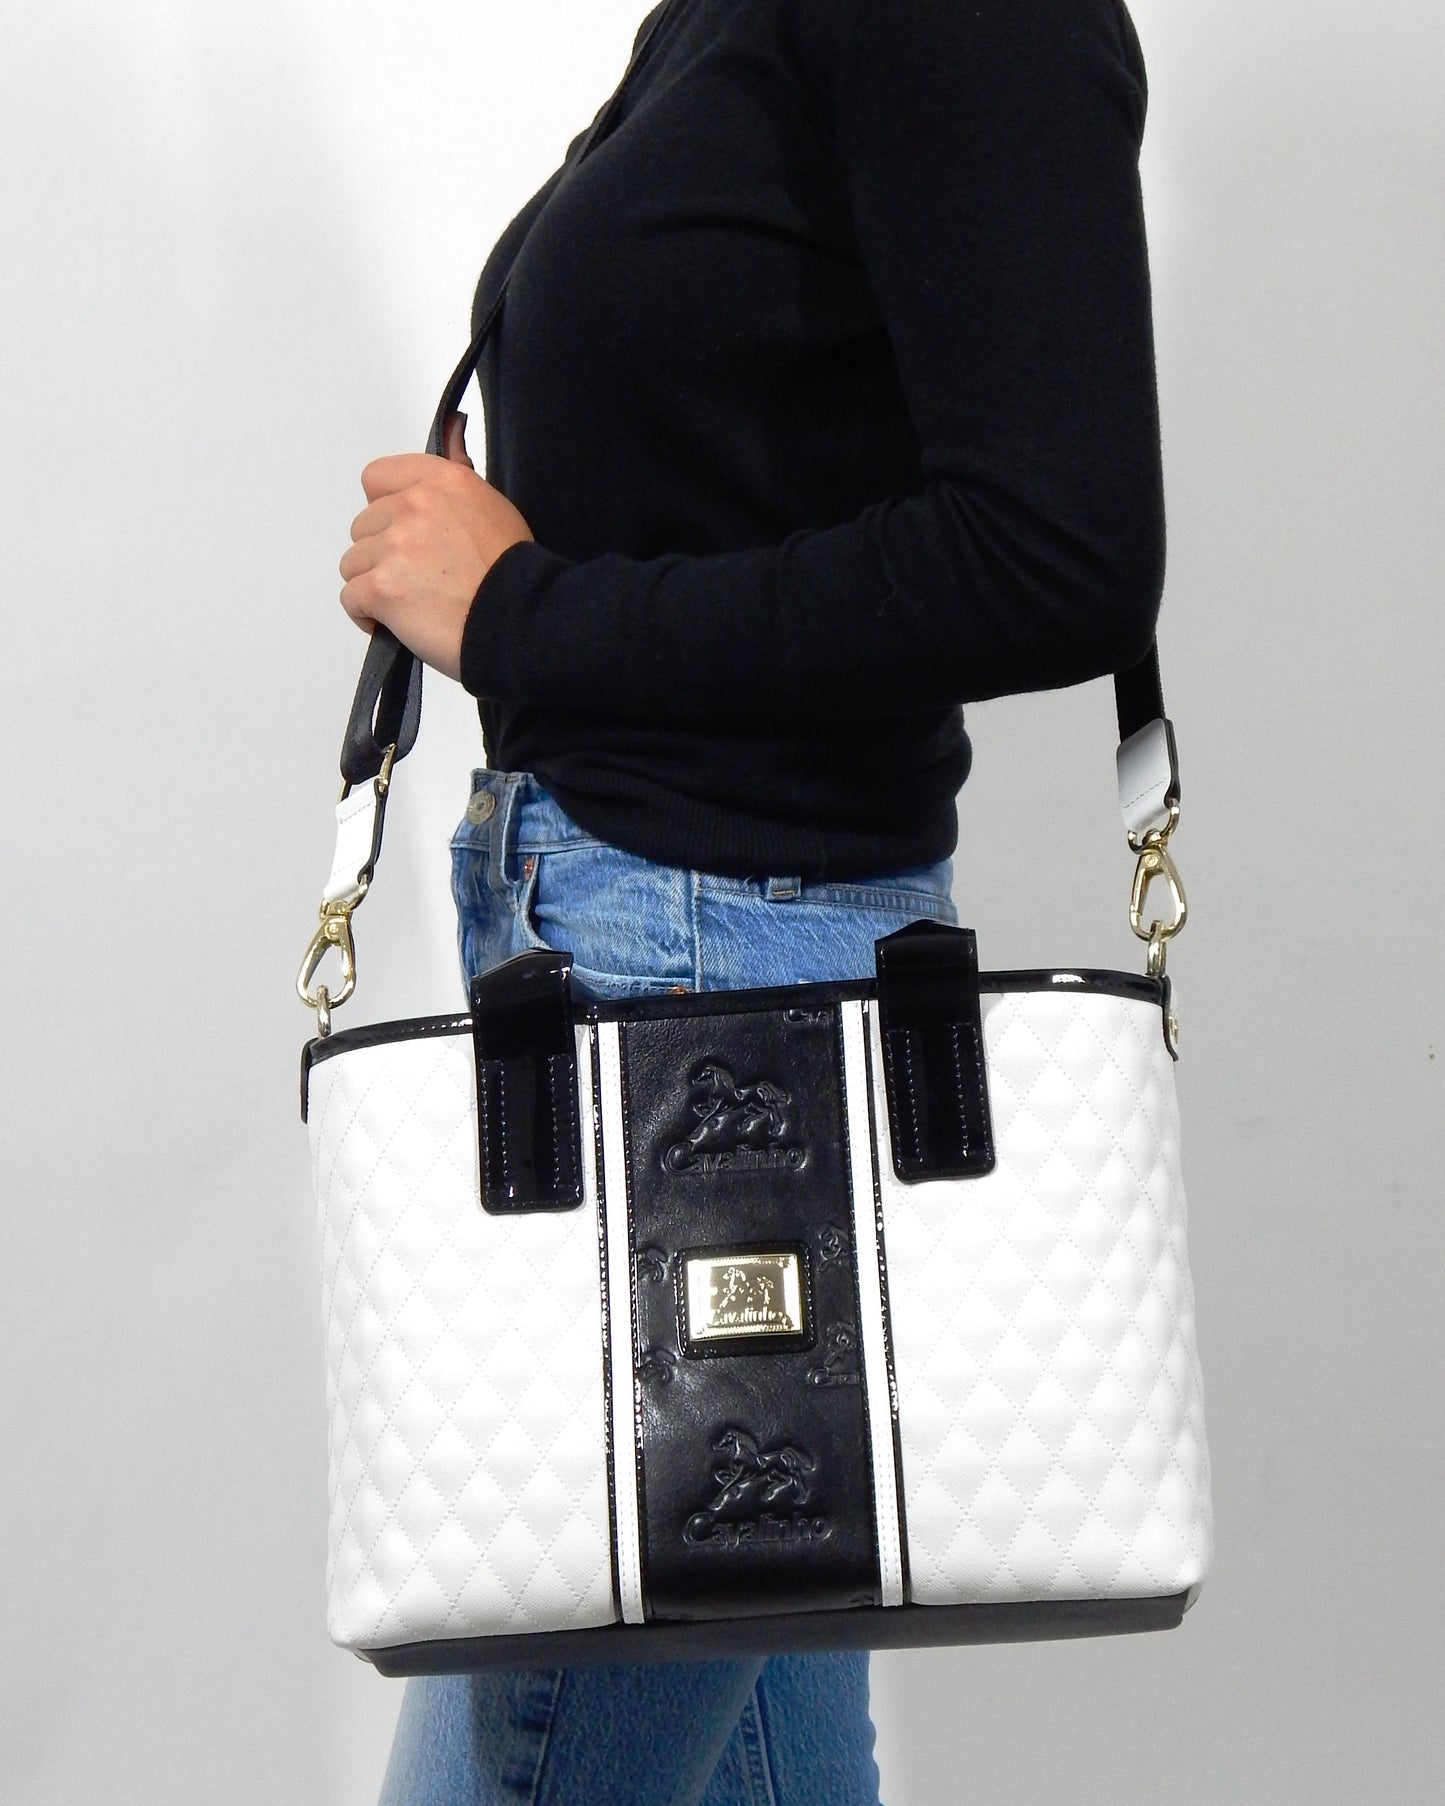 #color_ Black and White | Cavalinho Royal Handbag - Black and White - bodyshot_0493_2